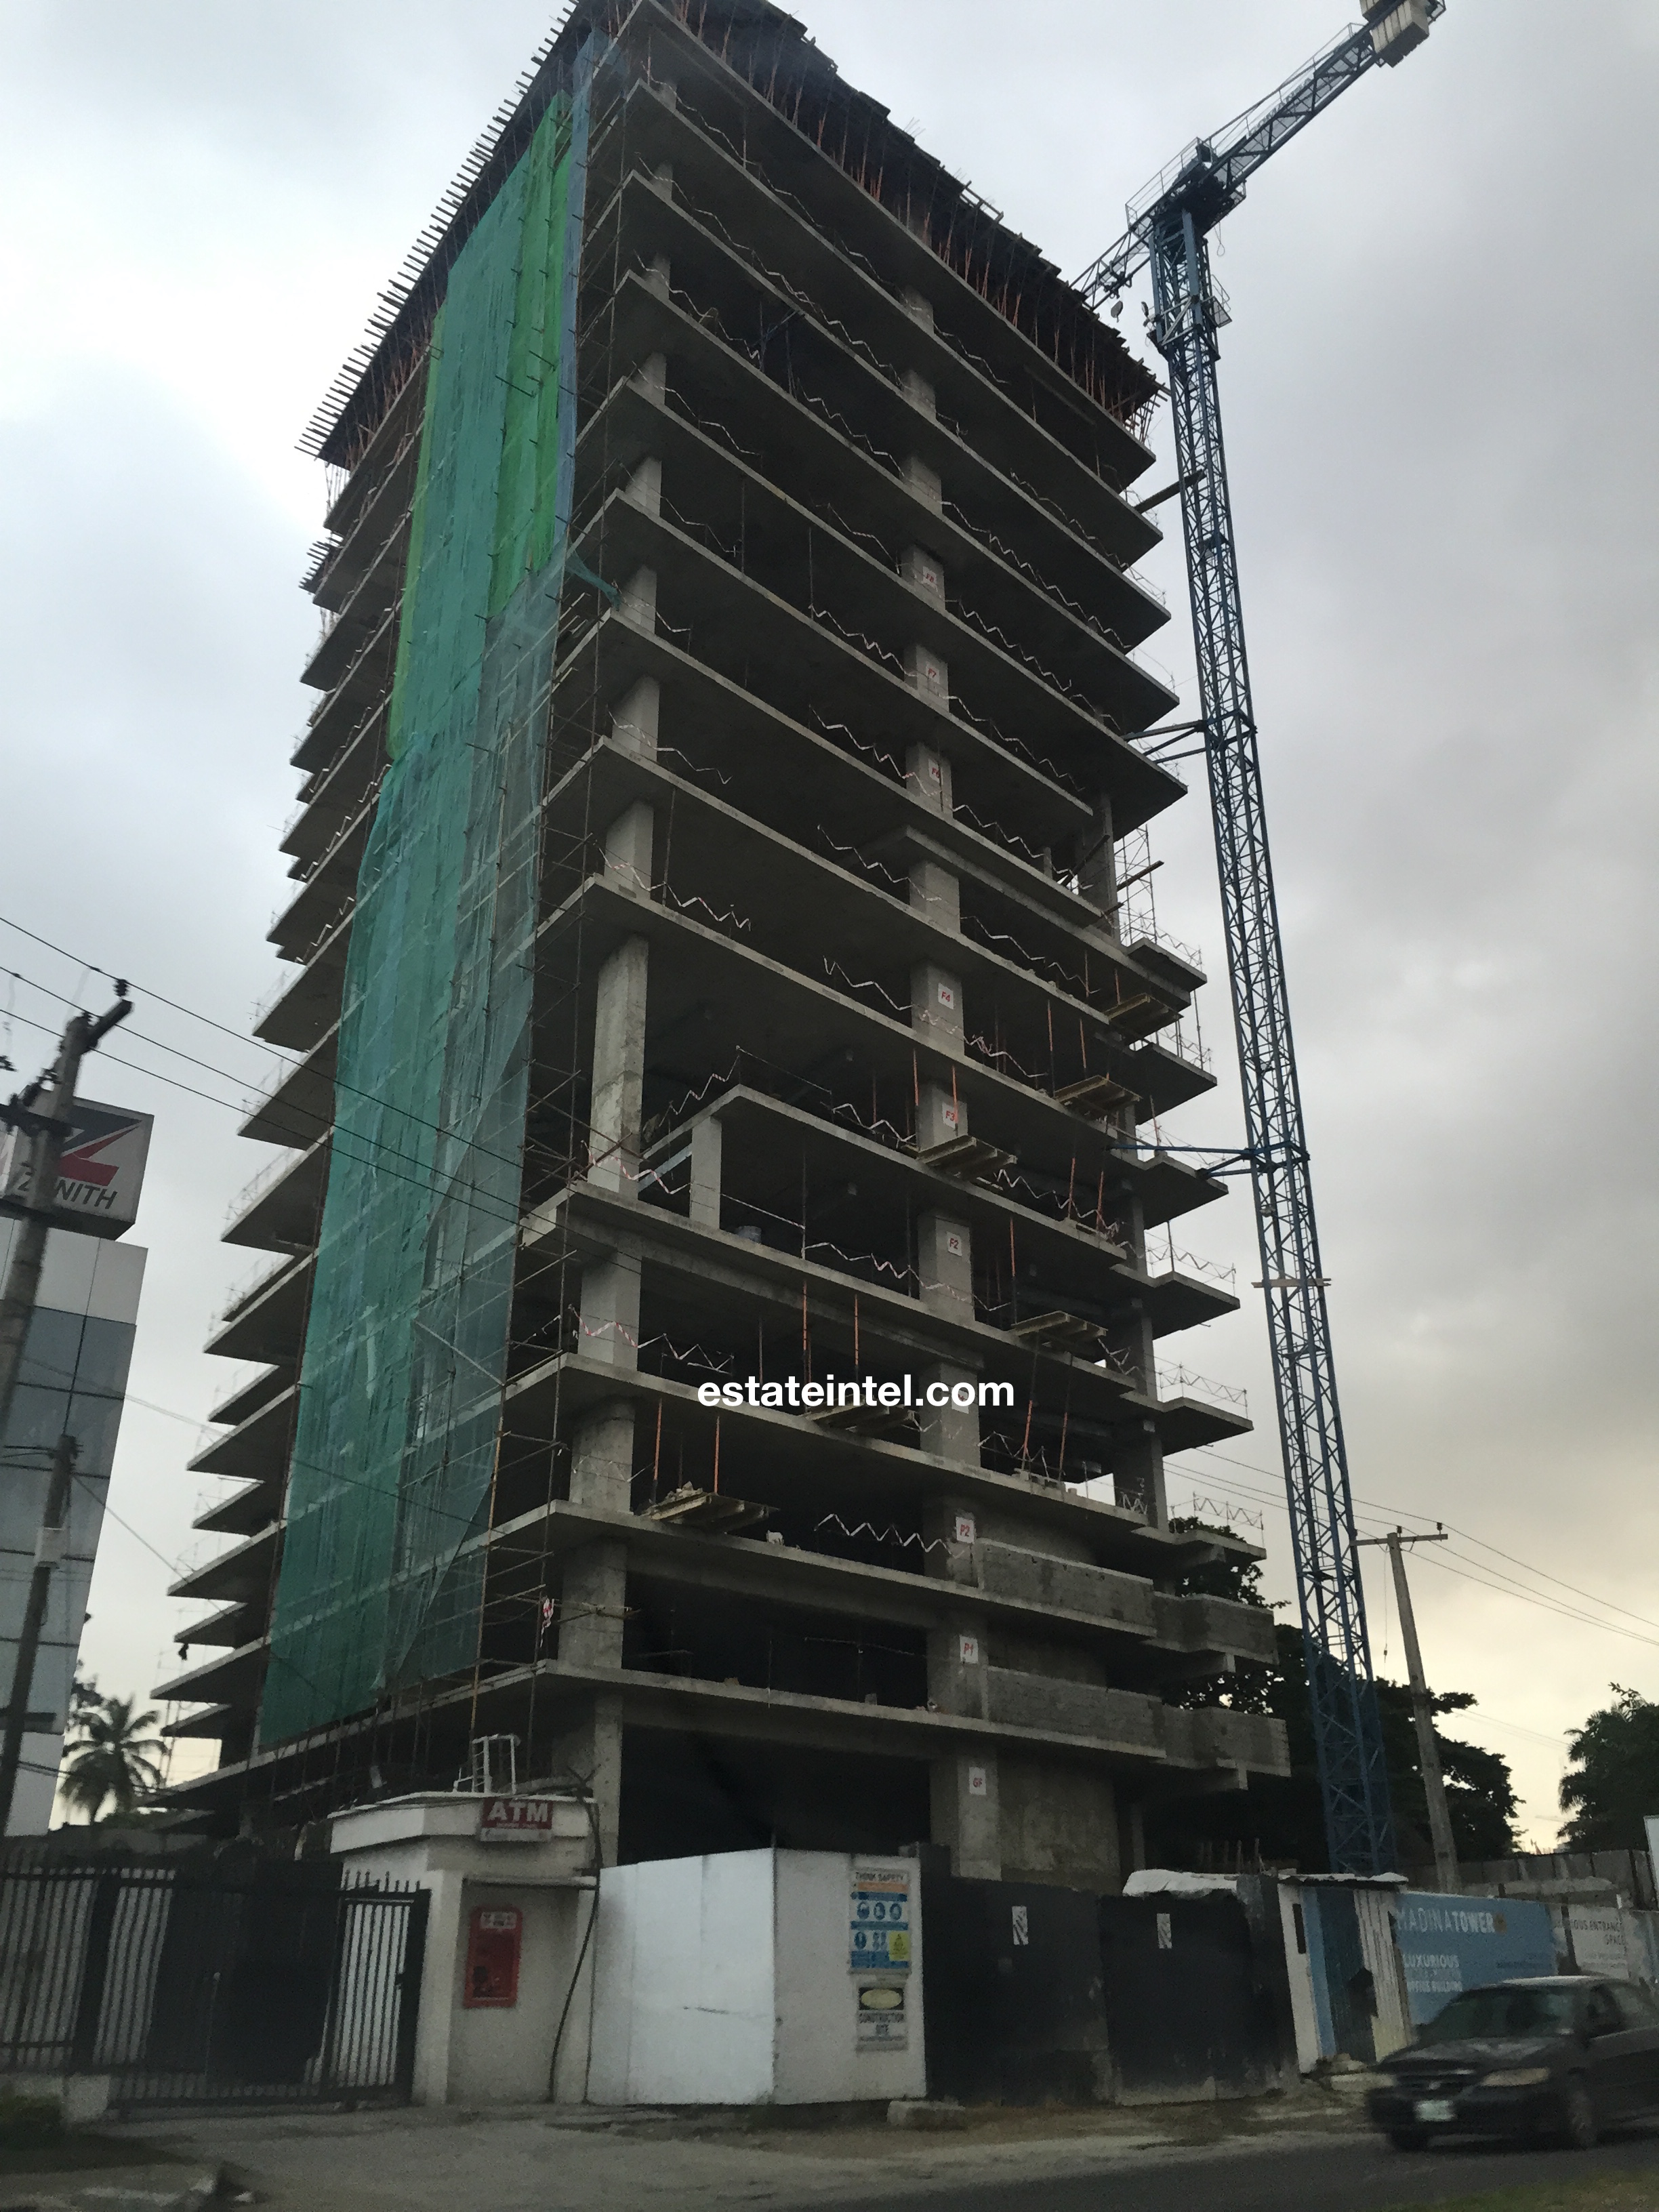 Madina Tower, July 2015